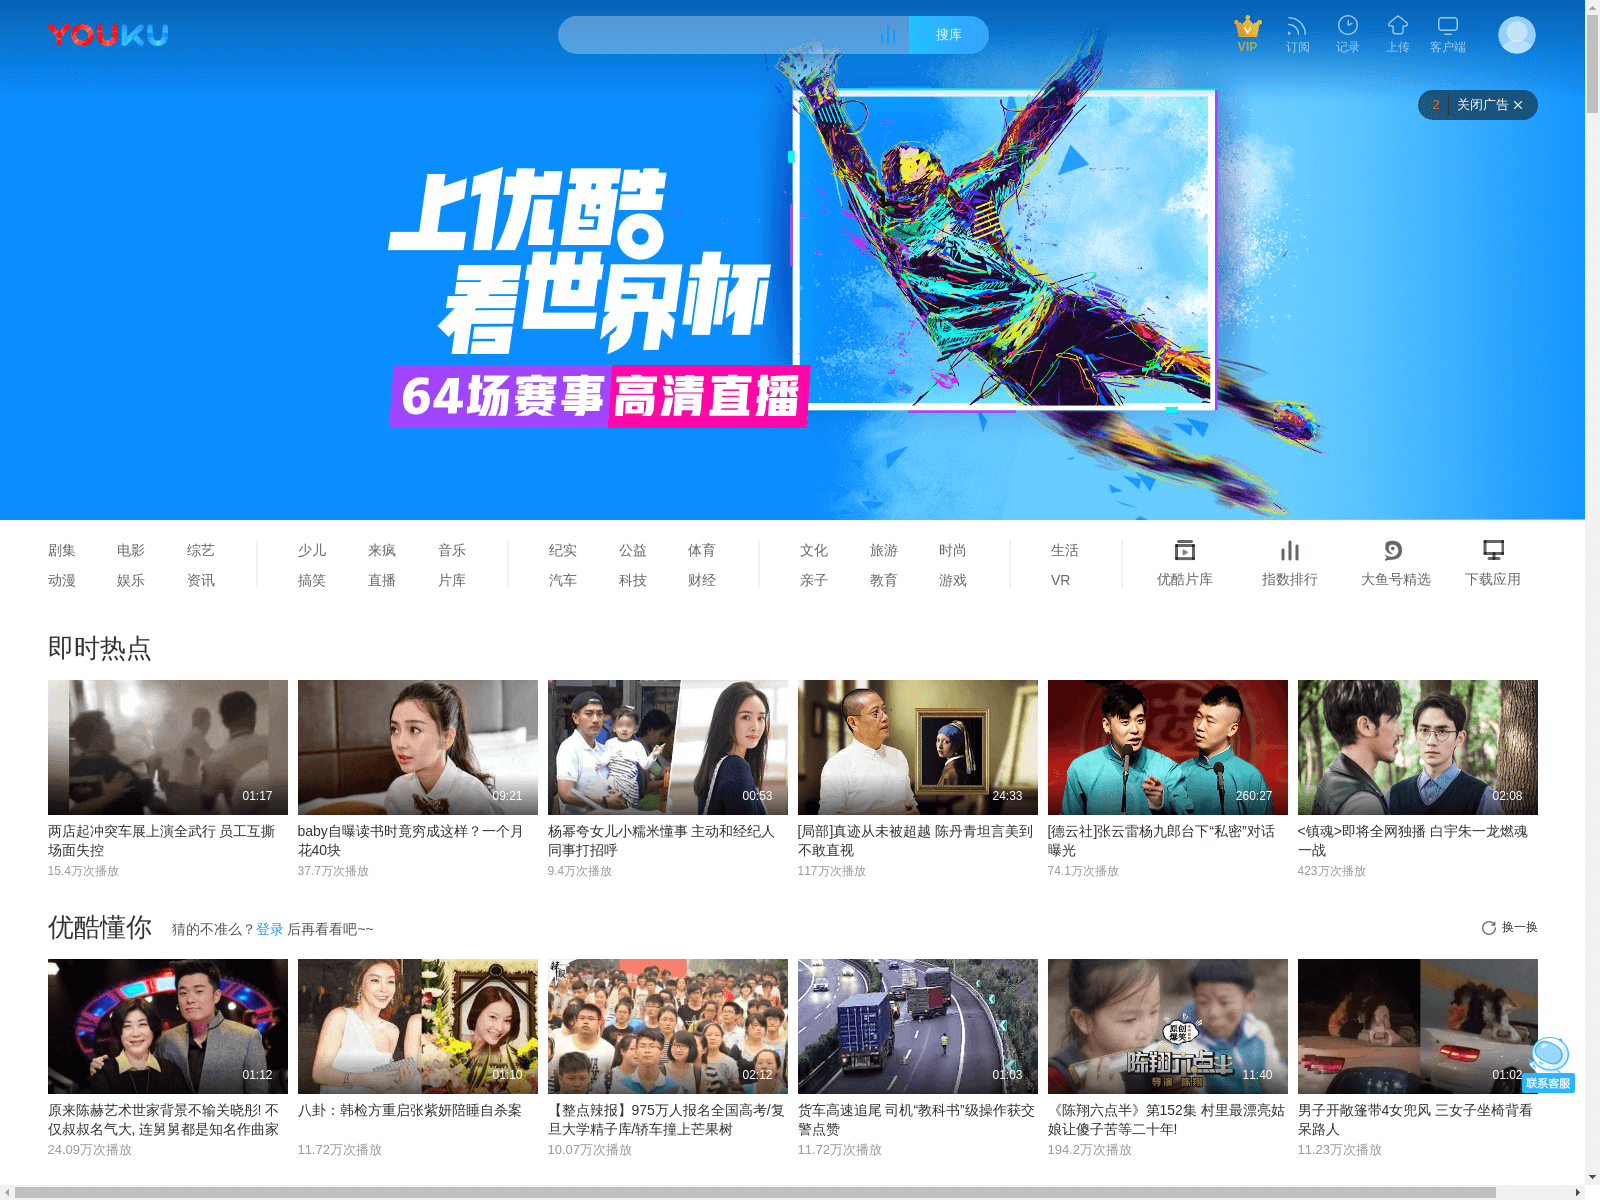 Youku social network